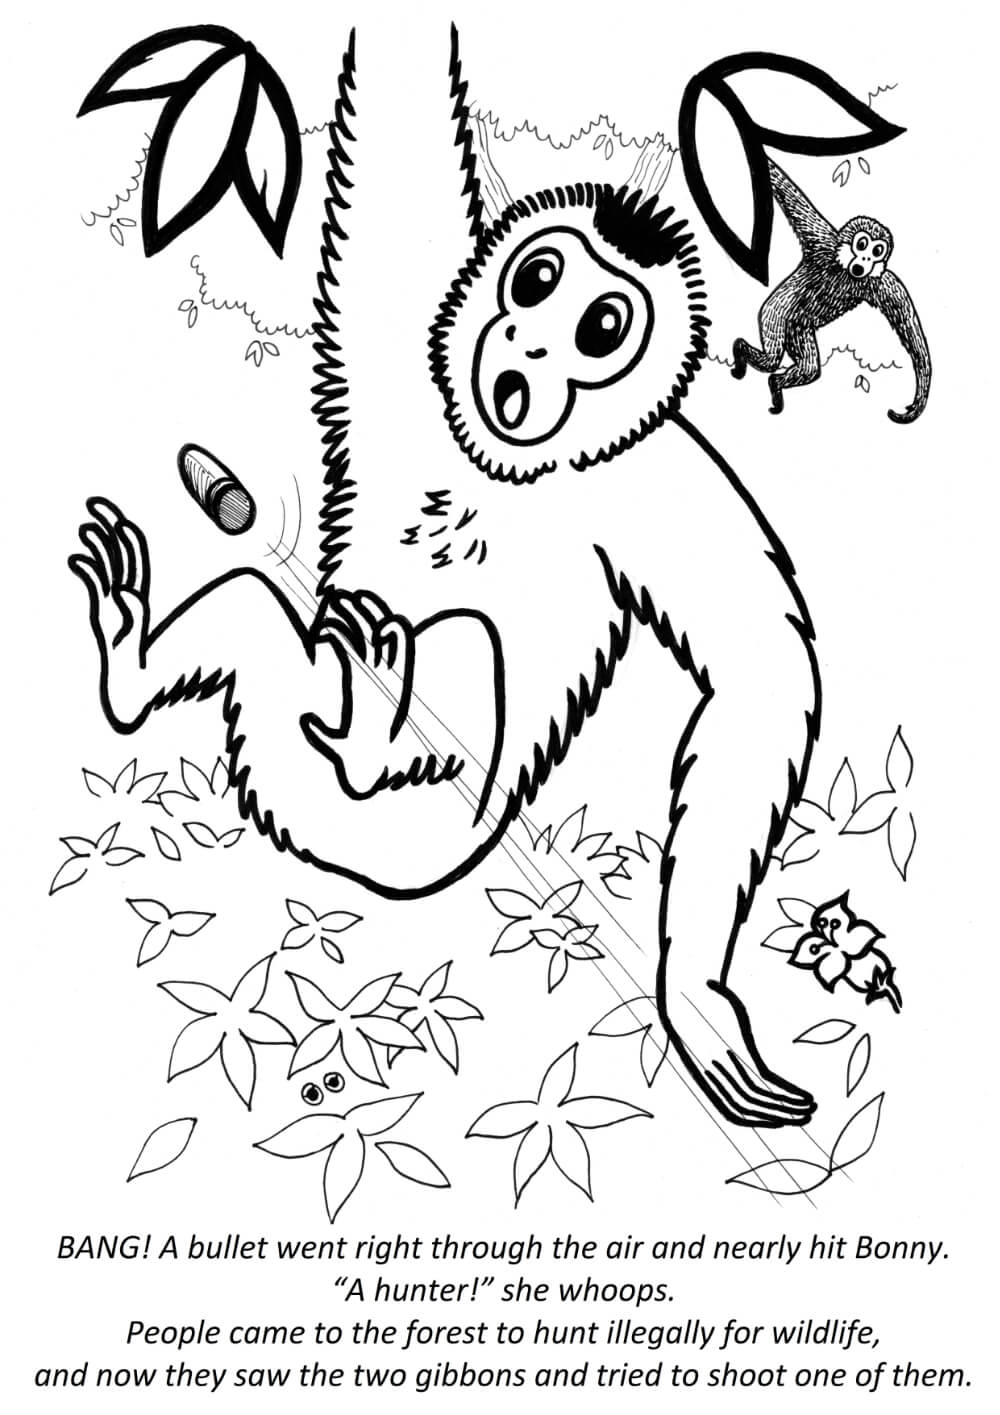 Tails of Cambodia - Primate conservation education book - Copyright Brenda de Groot